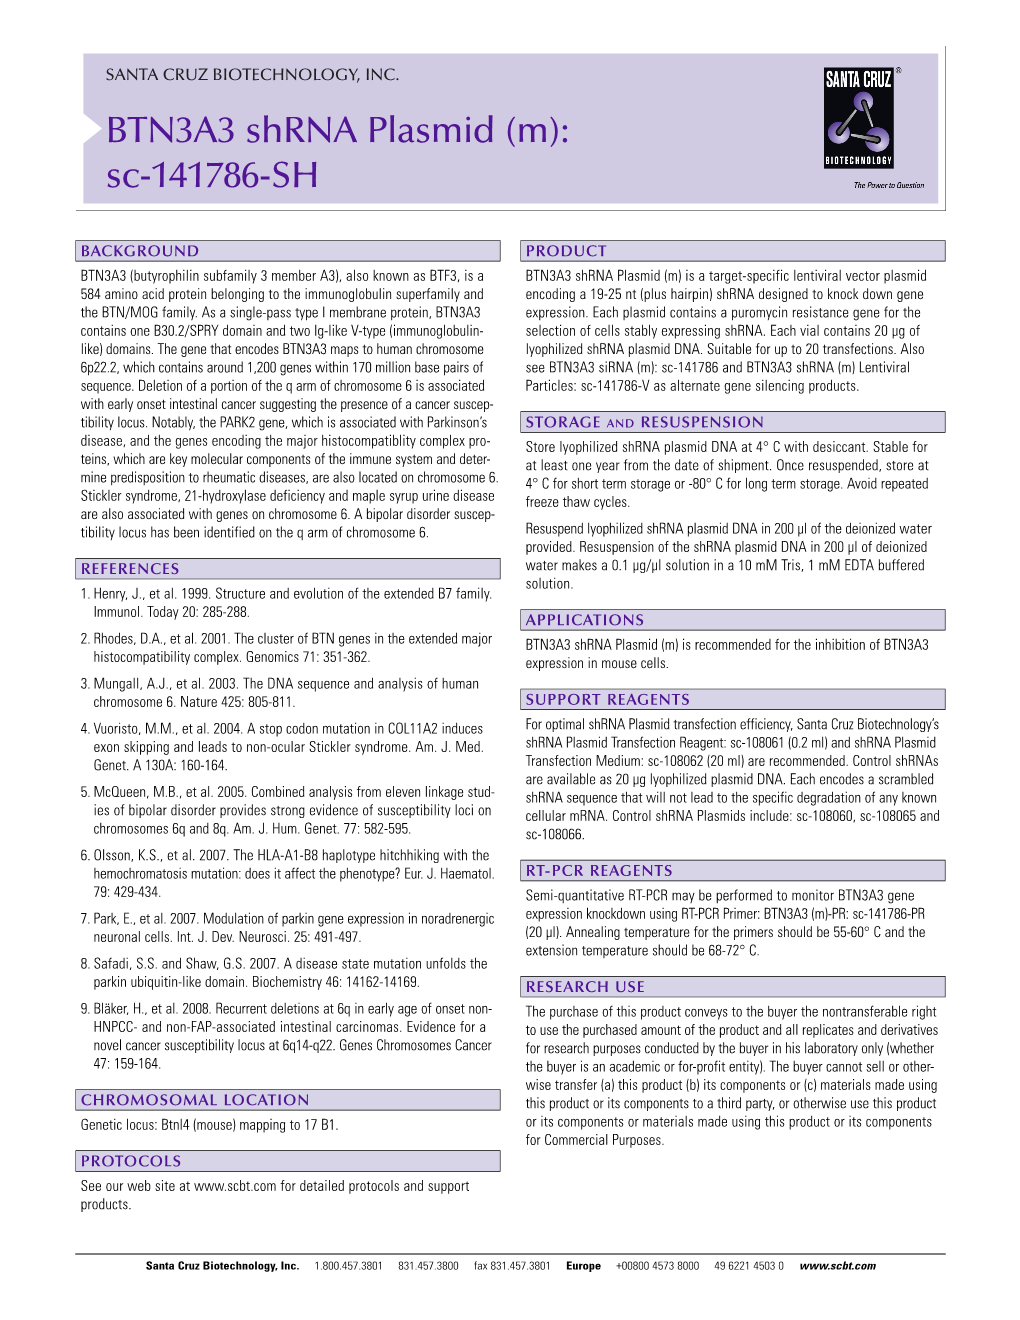 BTN3A3 Shrna Plasmid (M): Sc-141786-SH